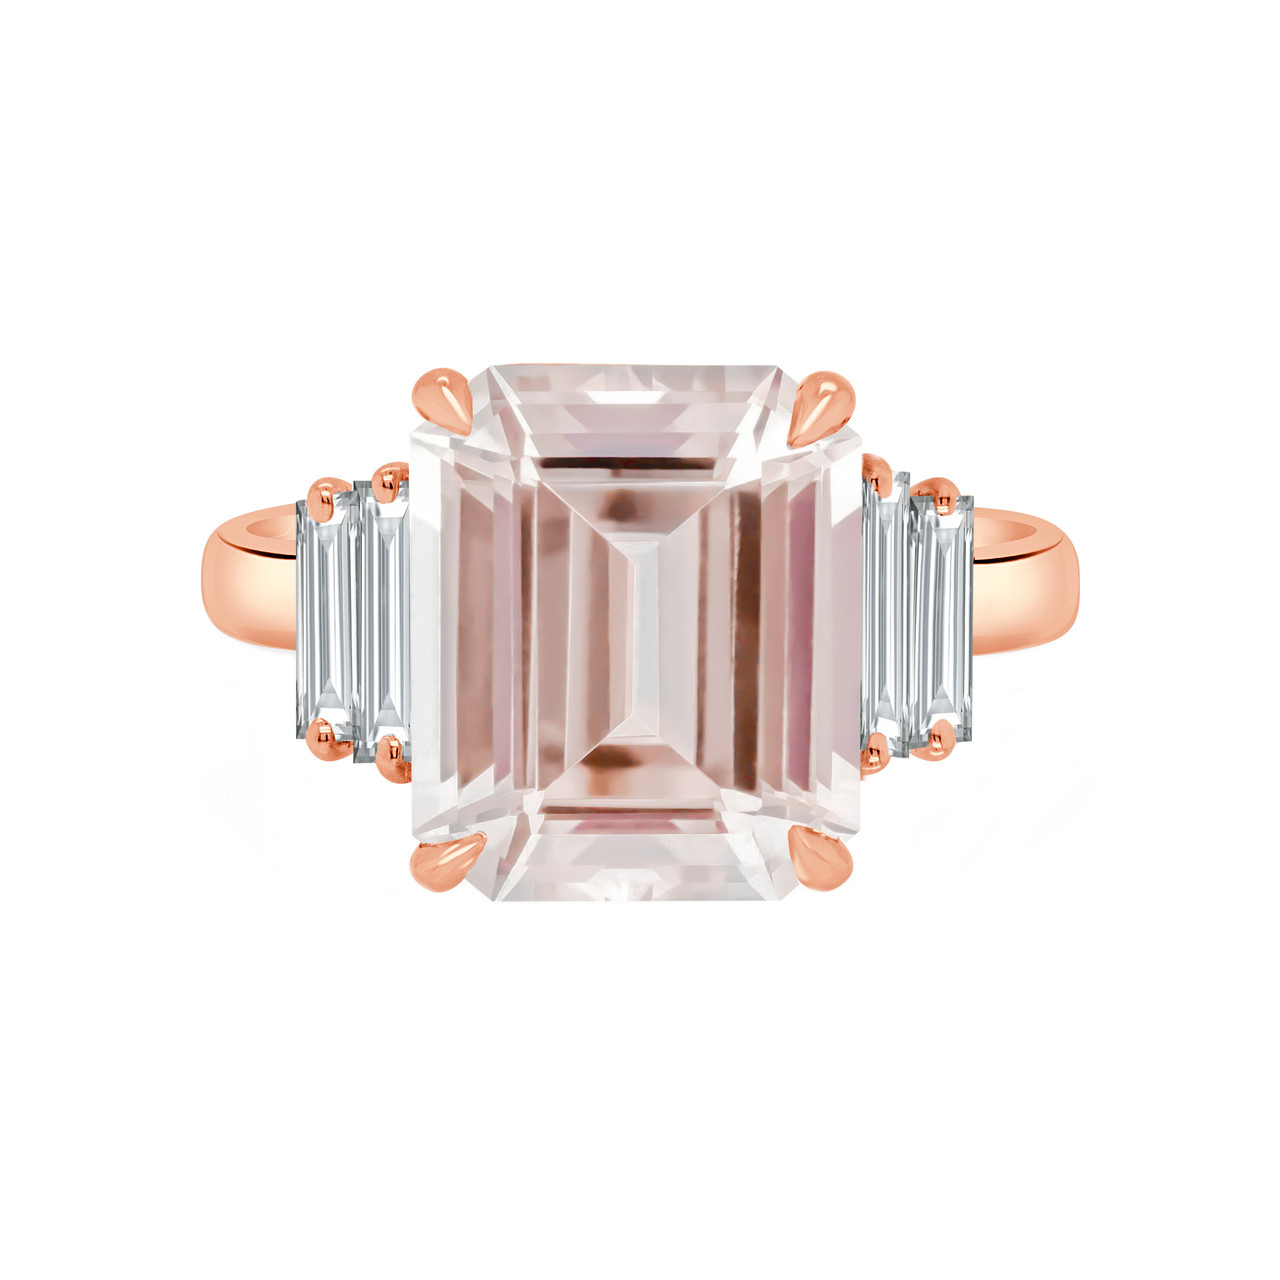 18K White Gold Diamond Halo Pink Sapphire Sun Pendant Necklace